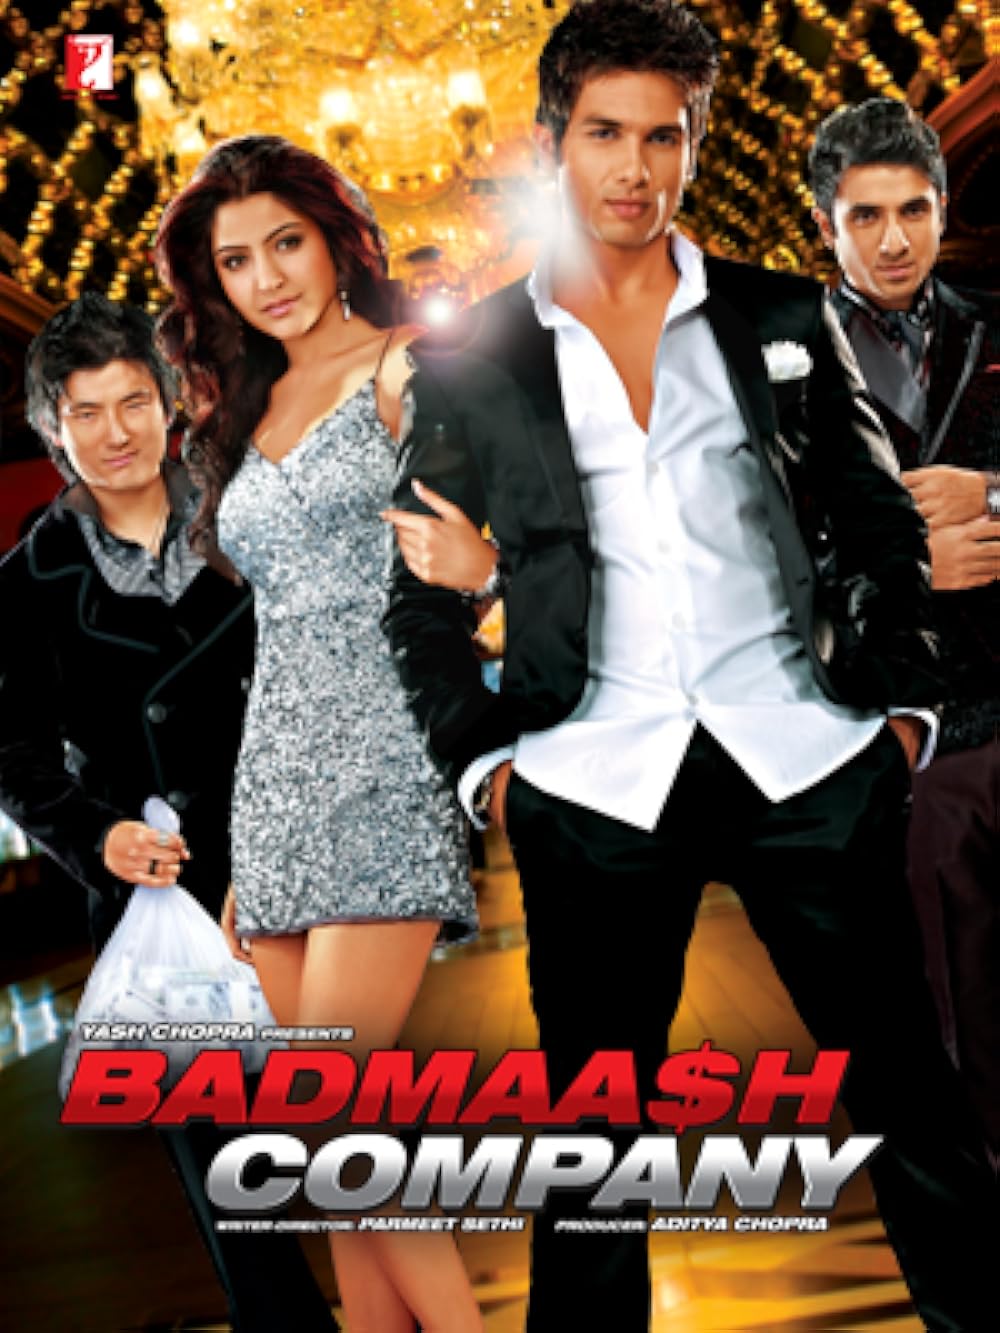 Download Badmaa$h Company (2010) Hindi Movie Bluray || 720p [900MB]